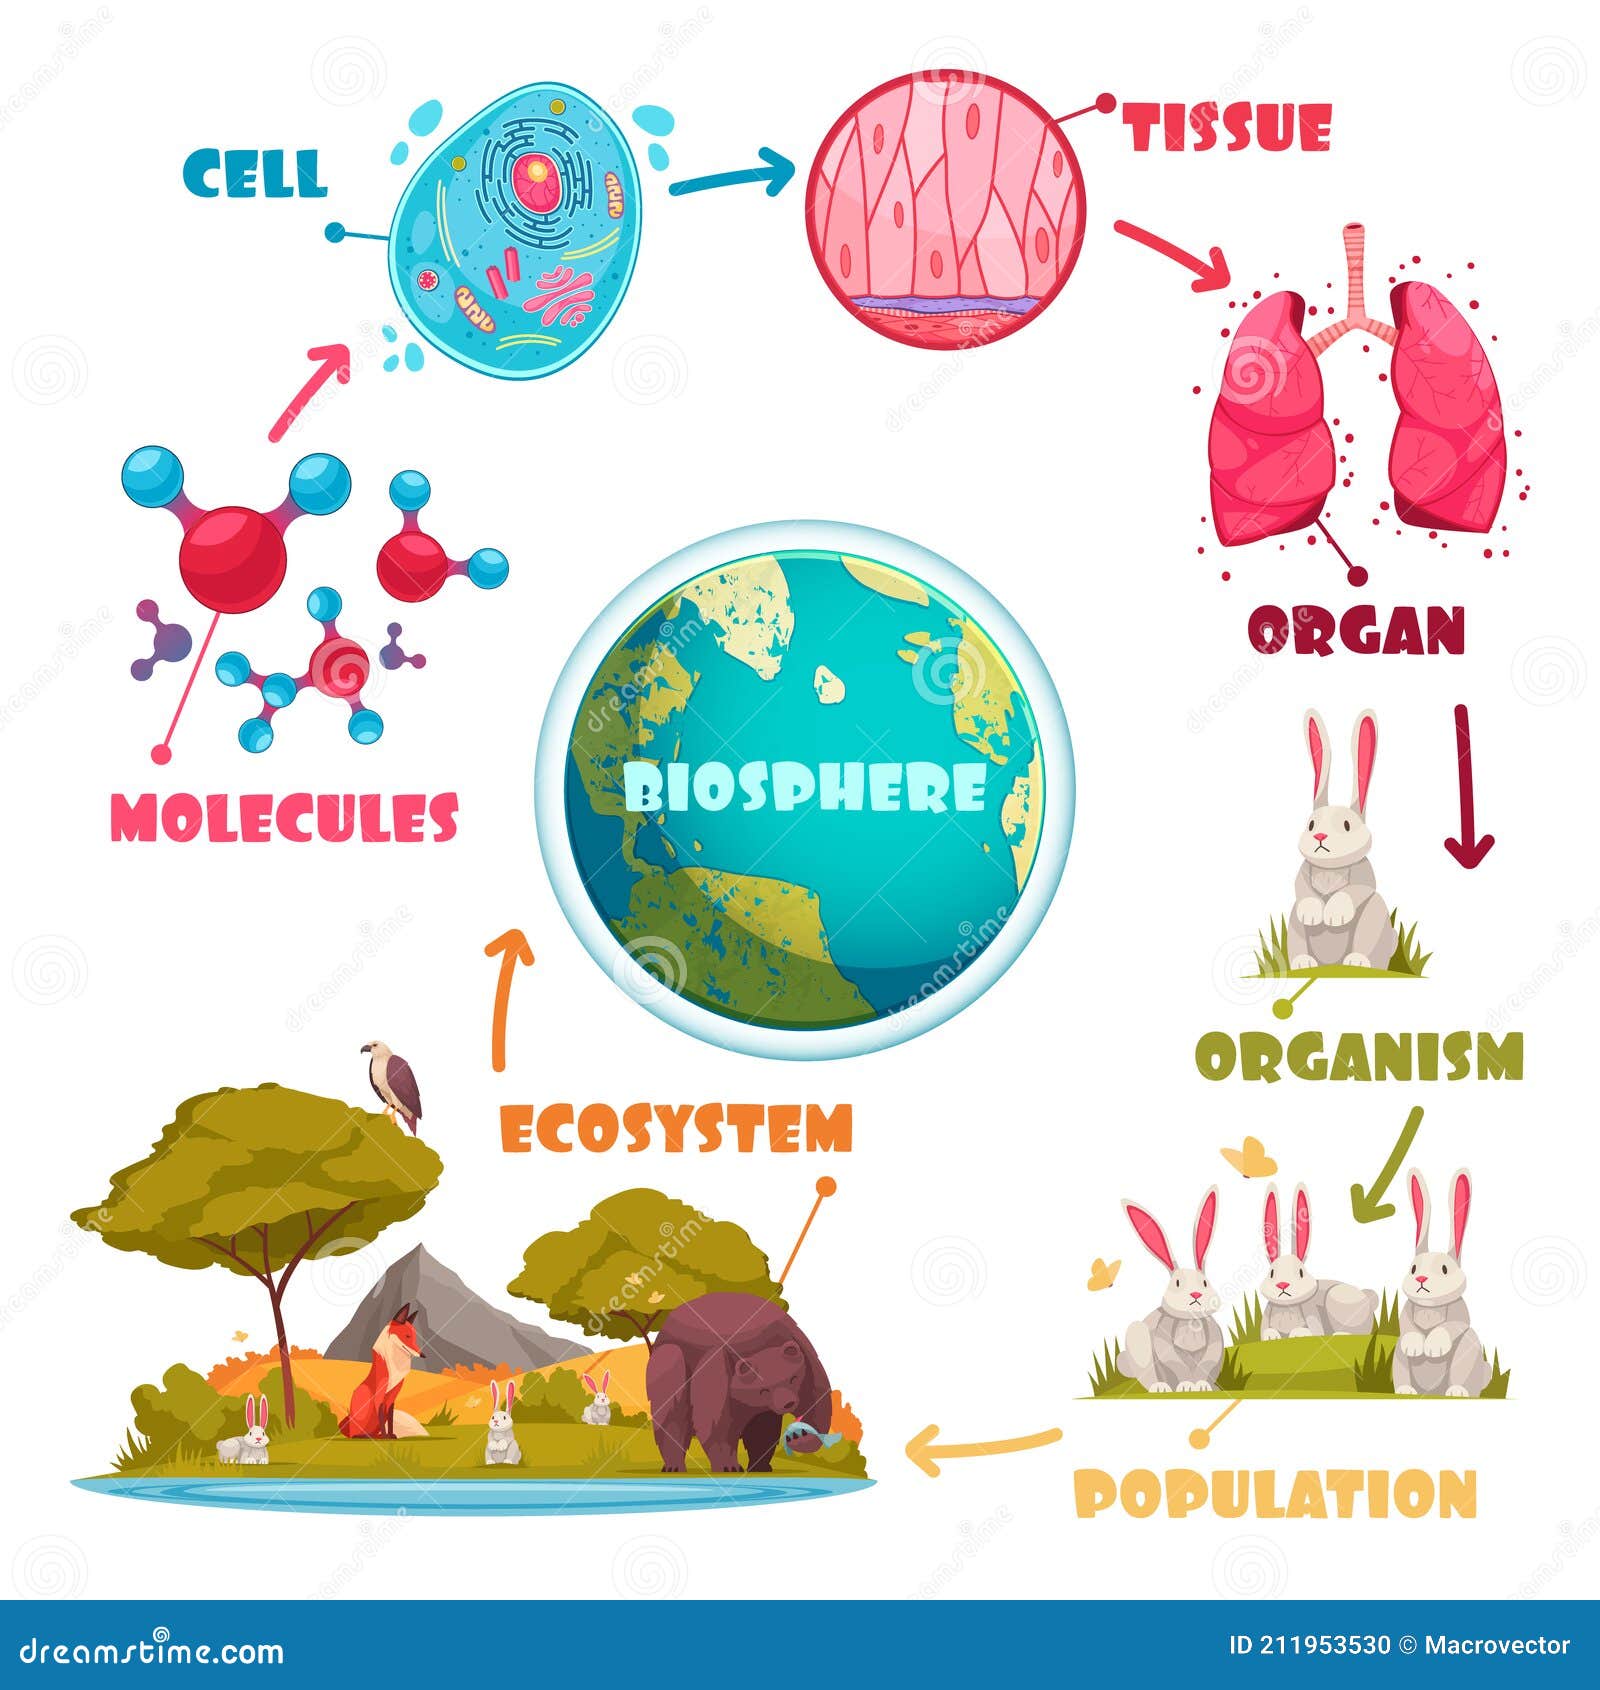 biological hierarchy cartoon set